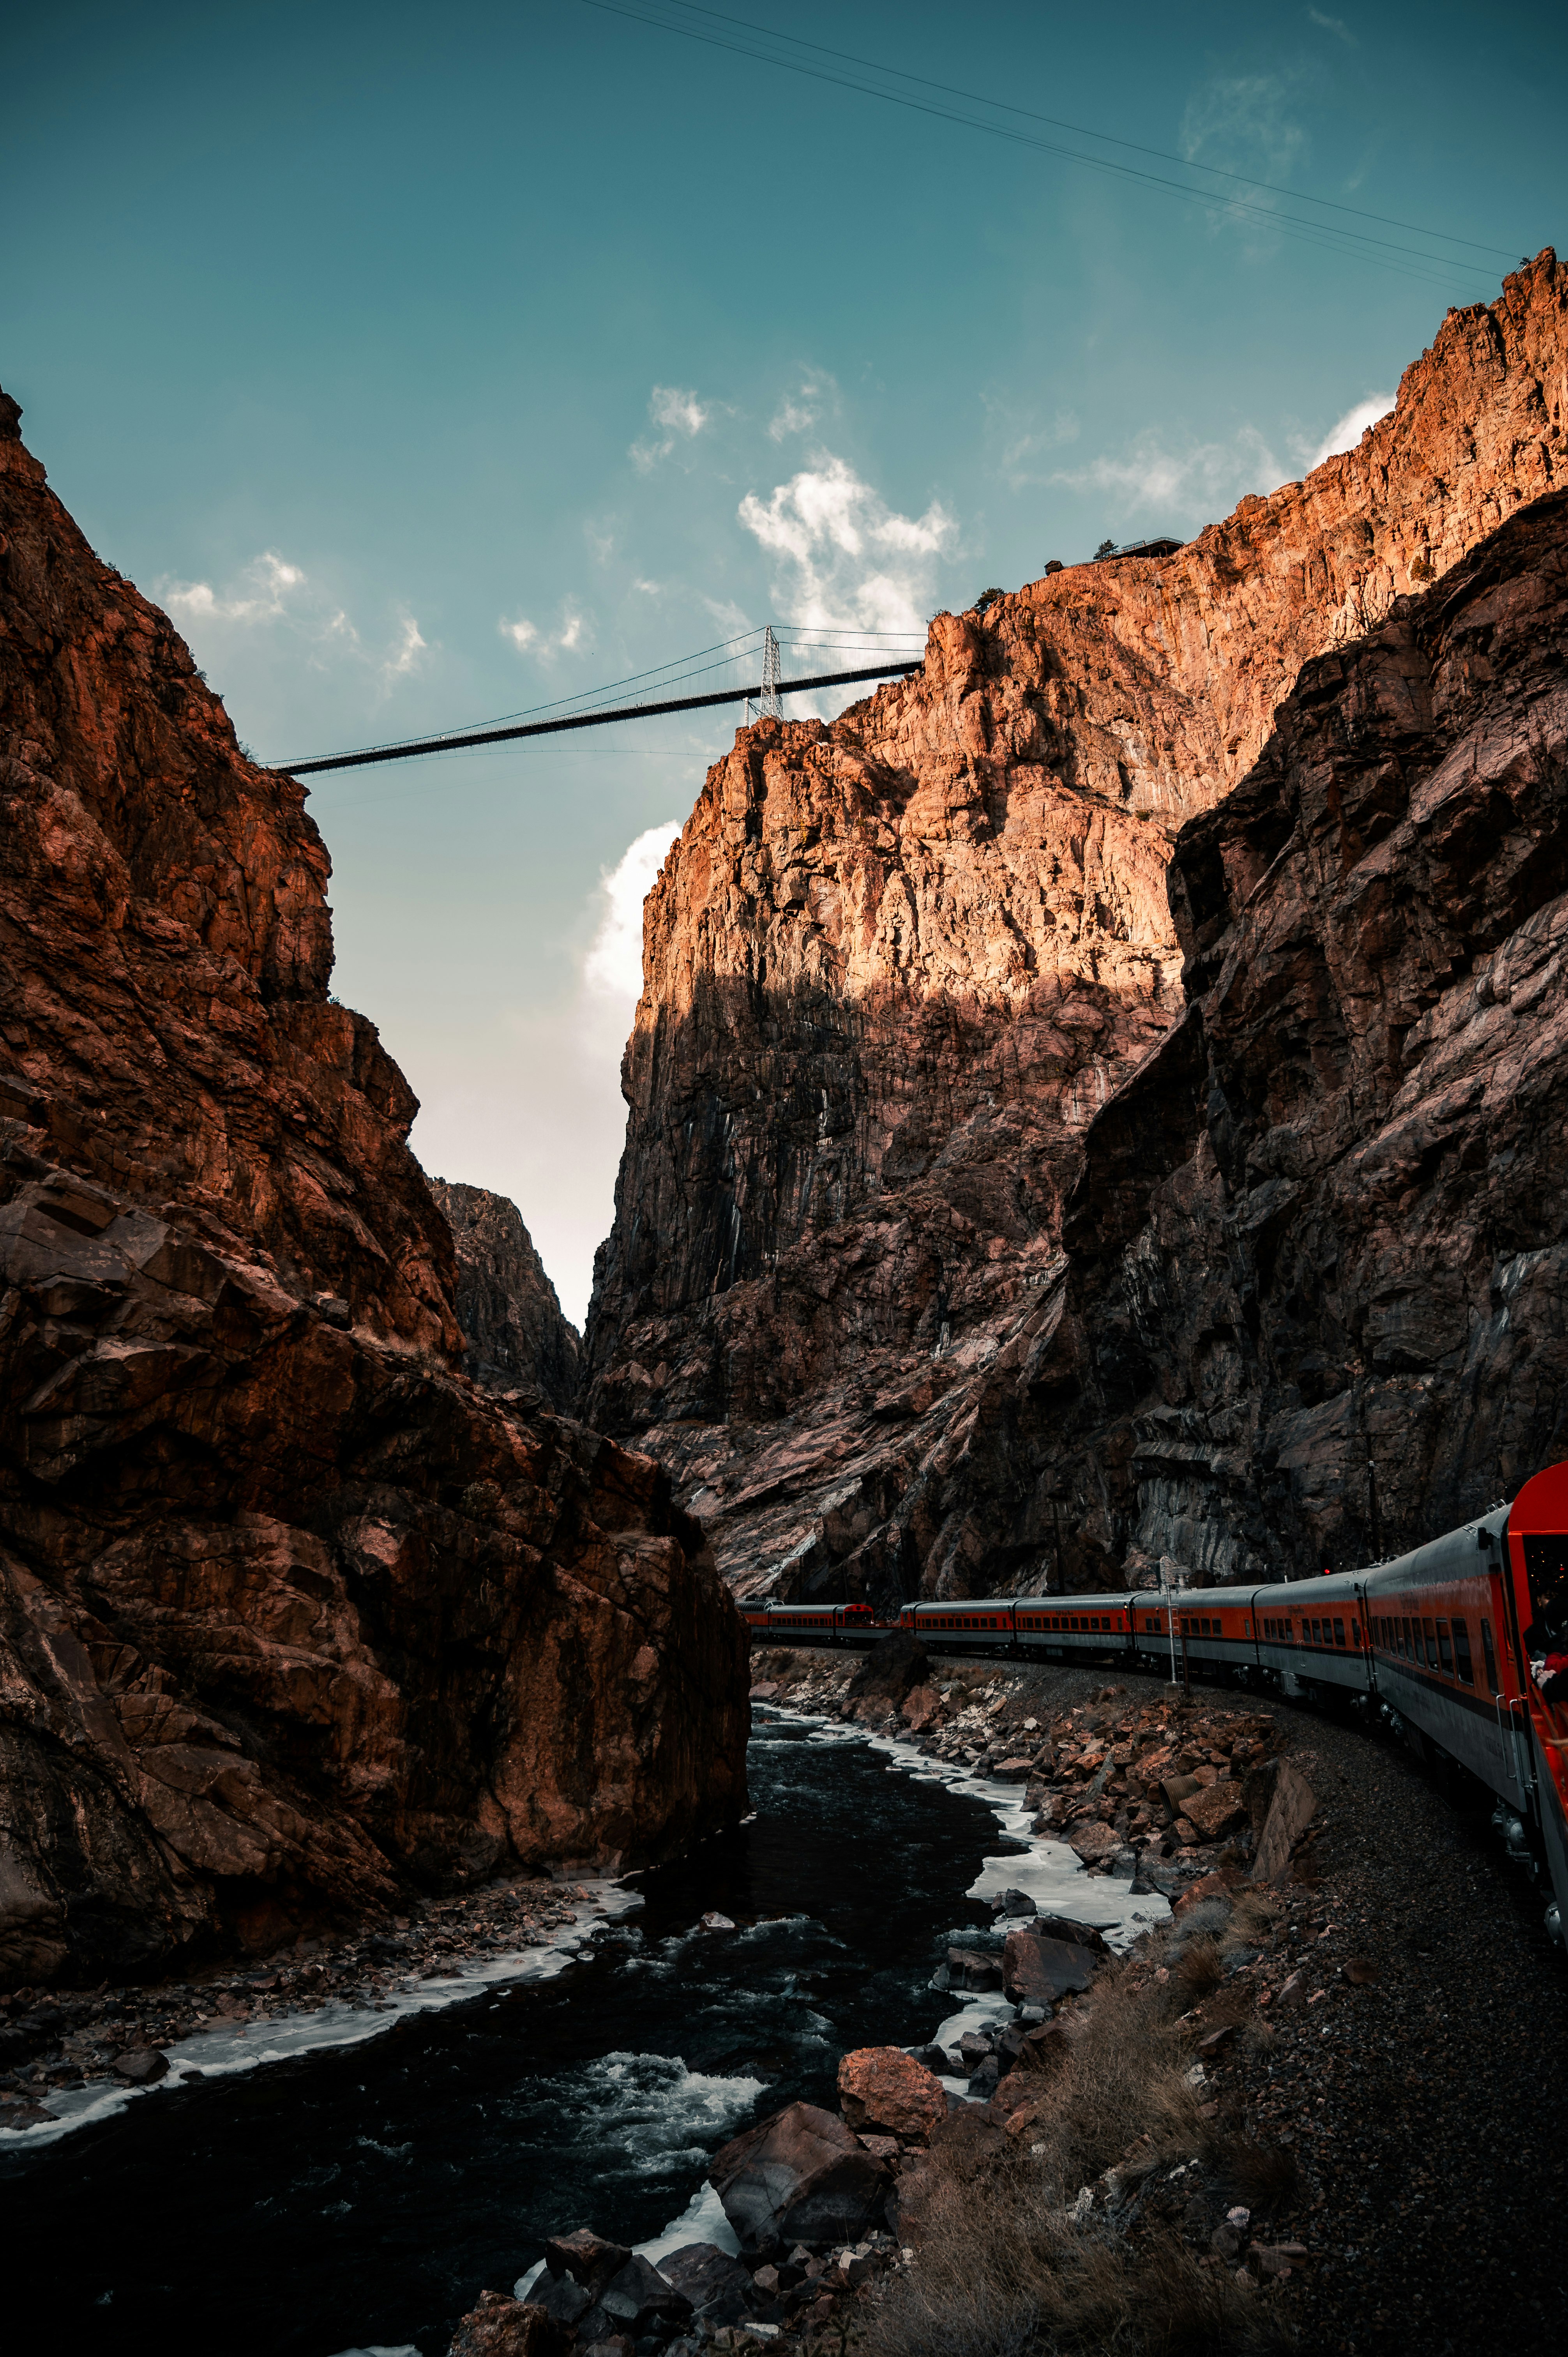 red bridge between brown rocky mountain during daytime